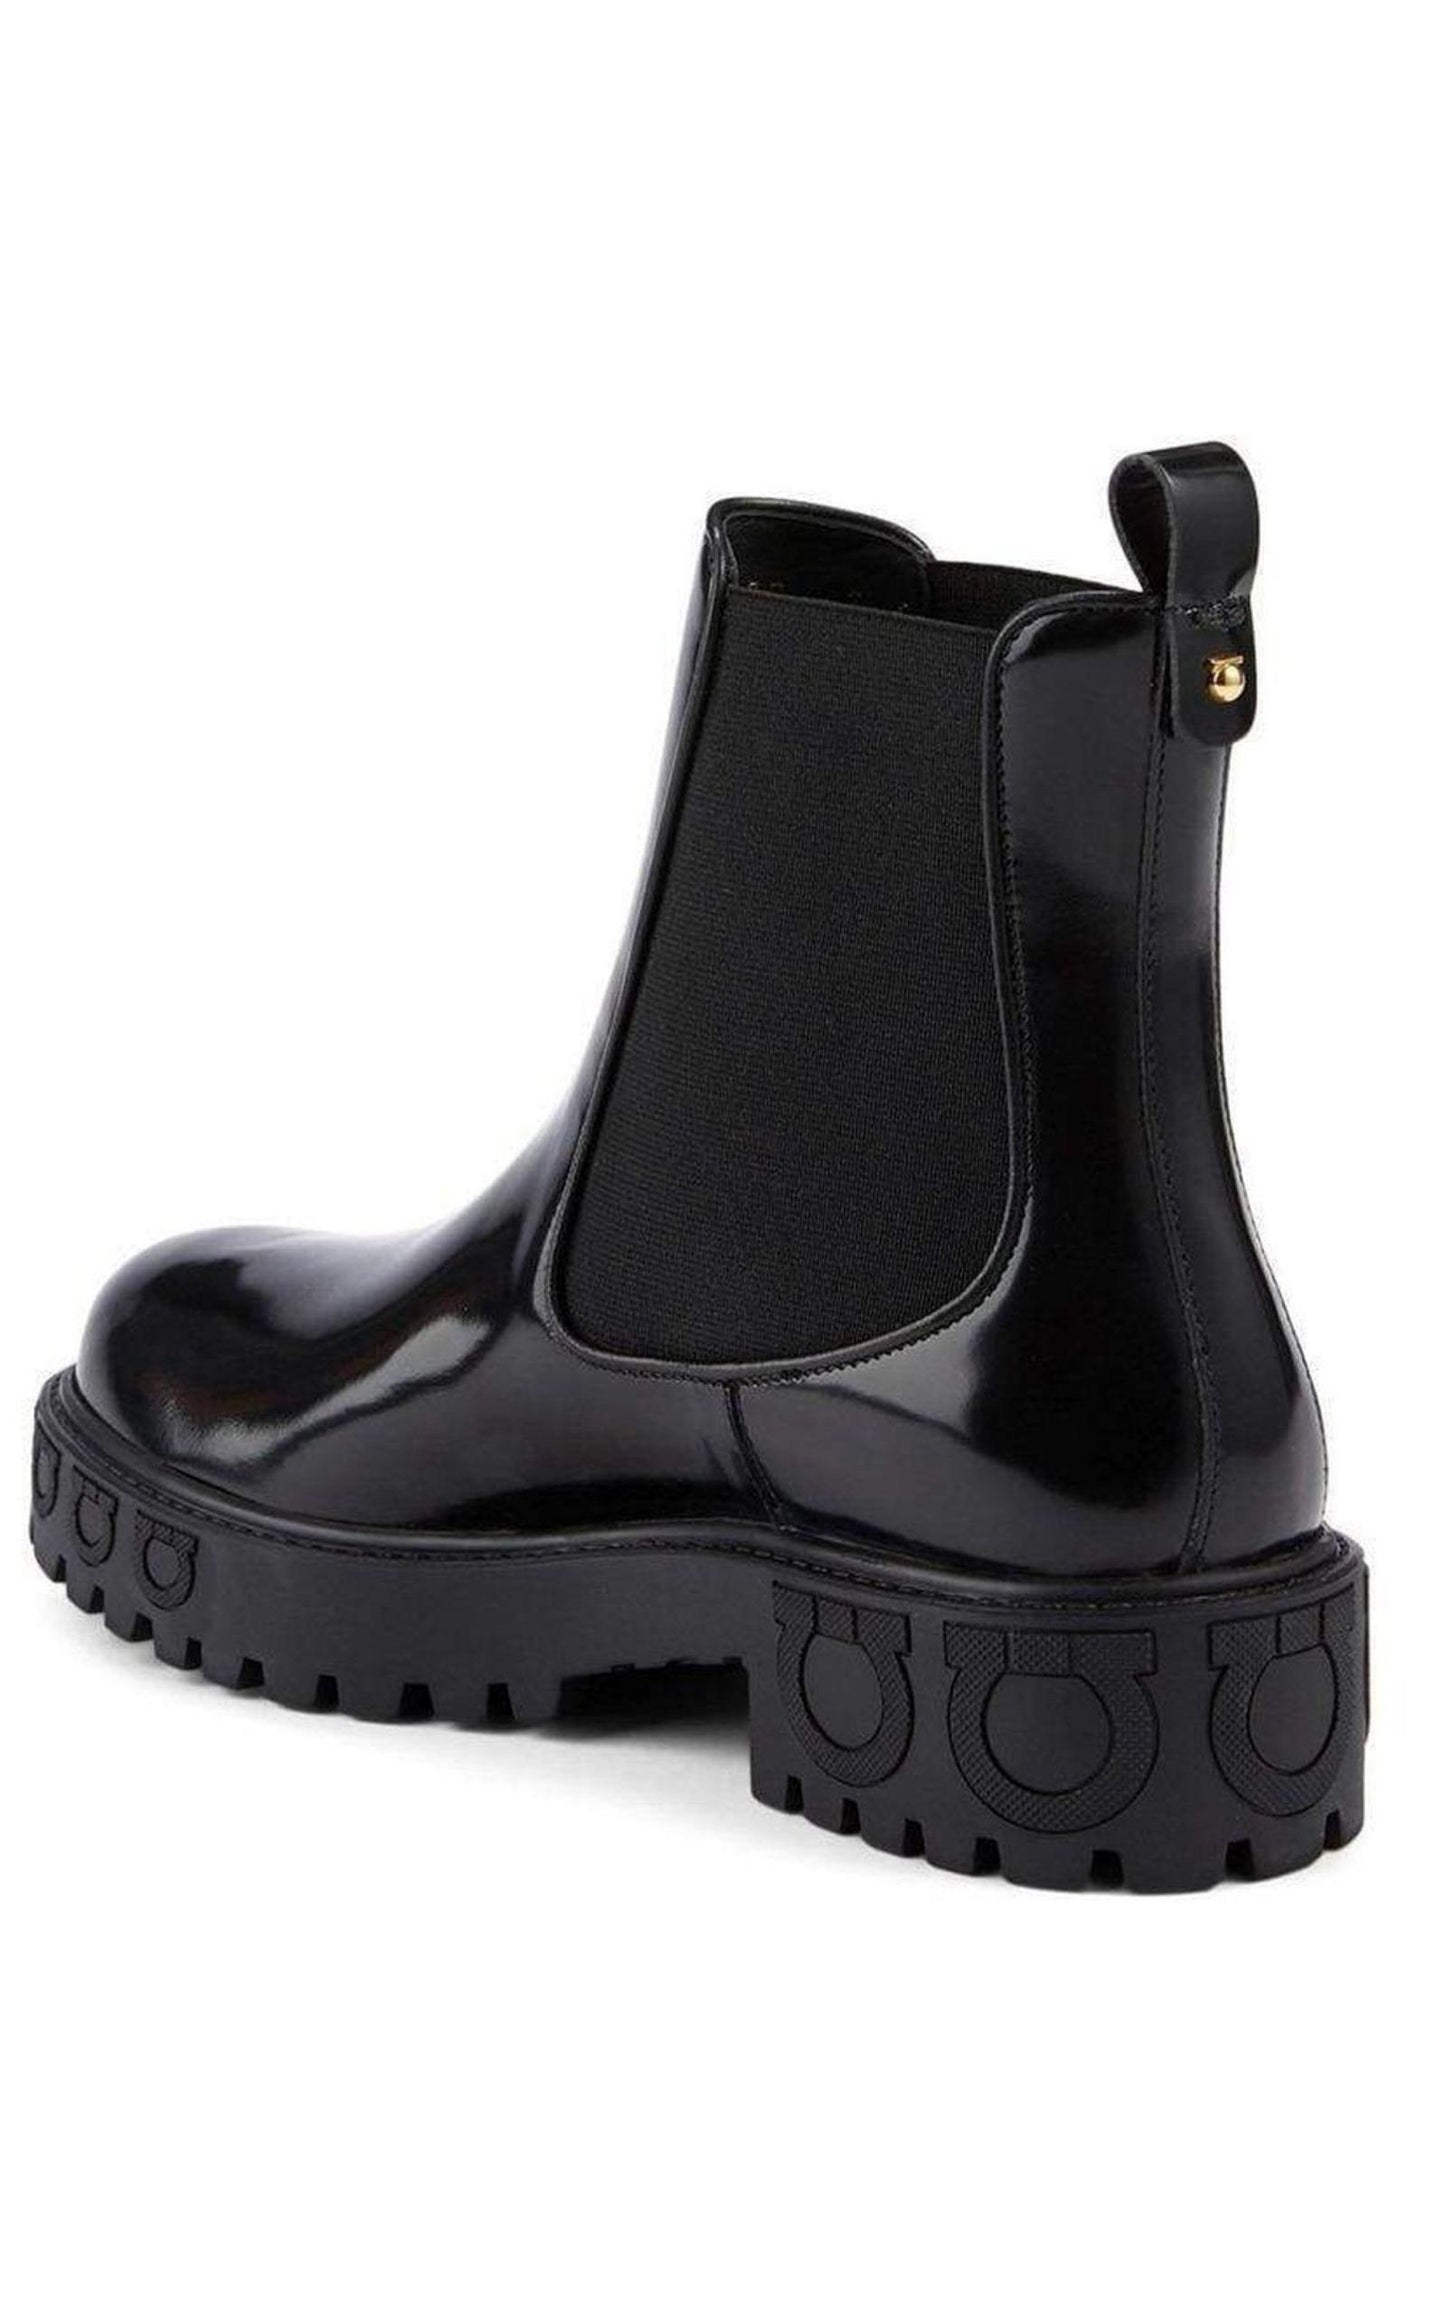  Salvatore FerragamoVarsi Leather Gancini-Sole Chelsea Boots - Runway Catalog